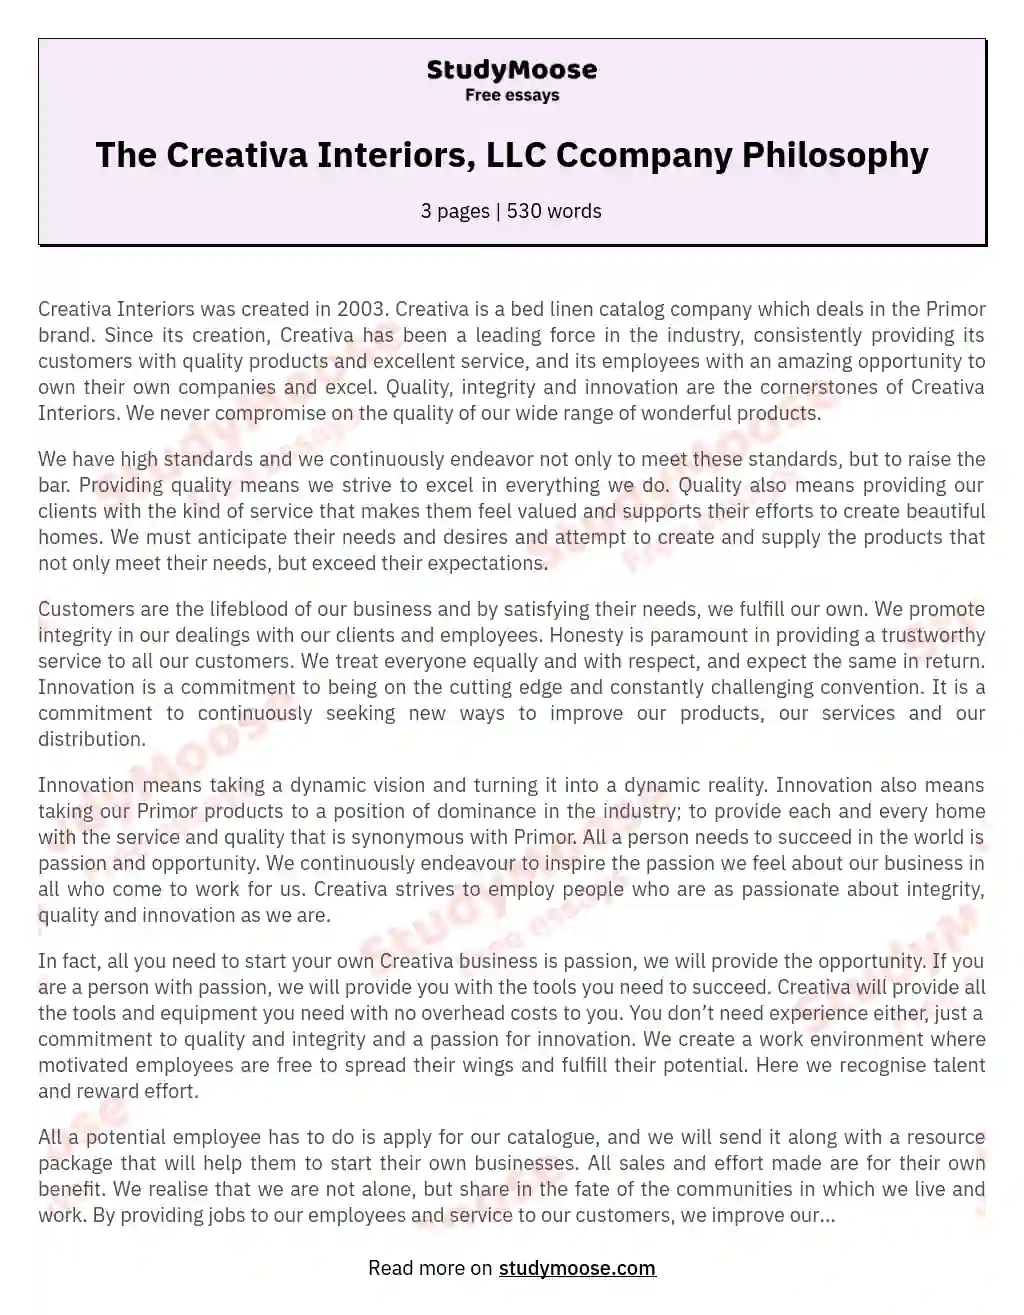 The Creativa Interiors, LLC Ccompany Philosophy essay